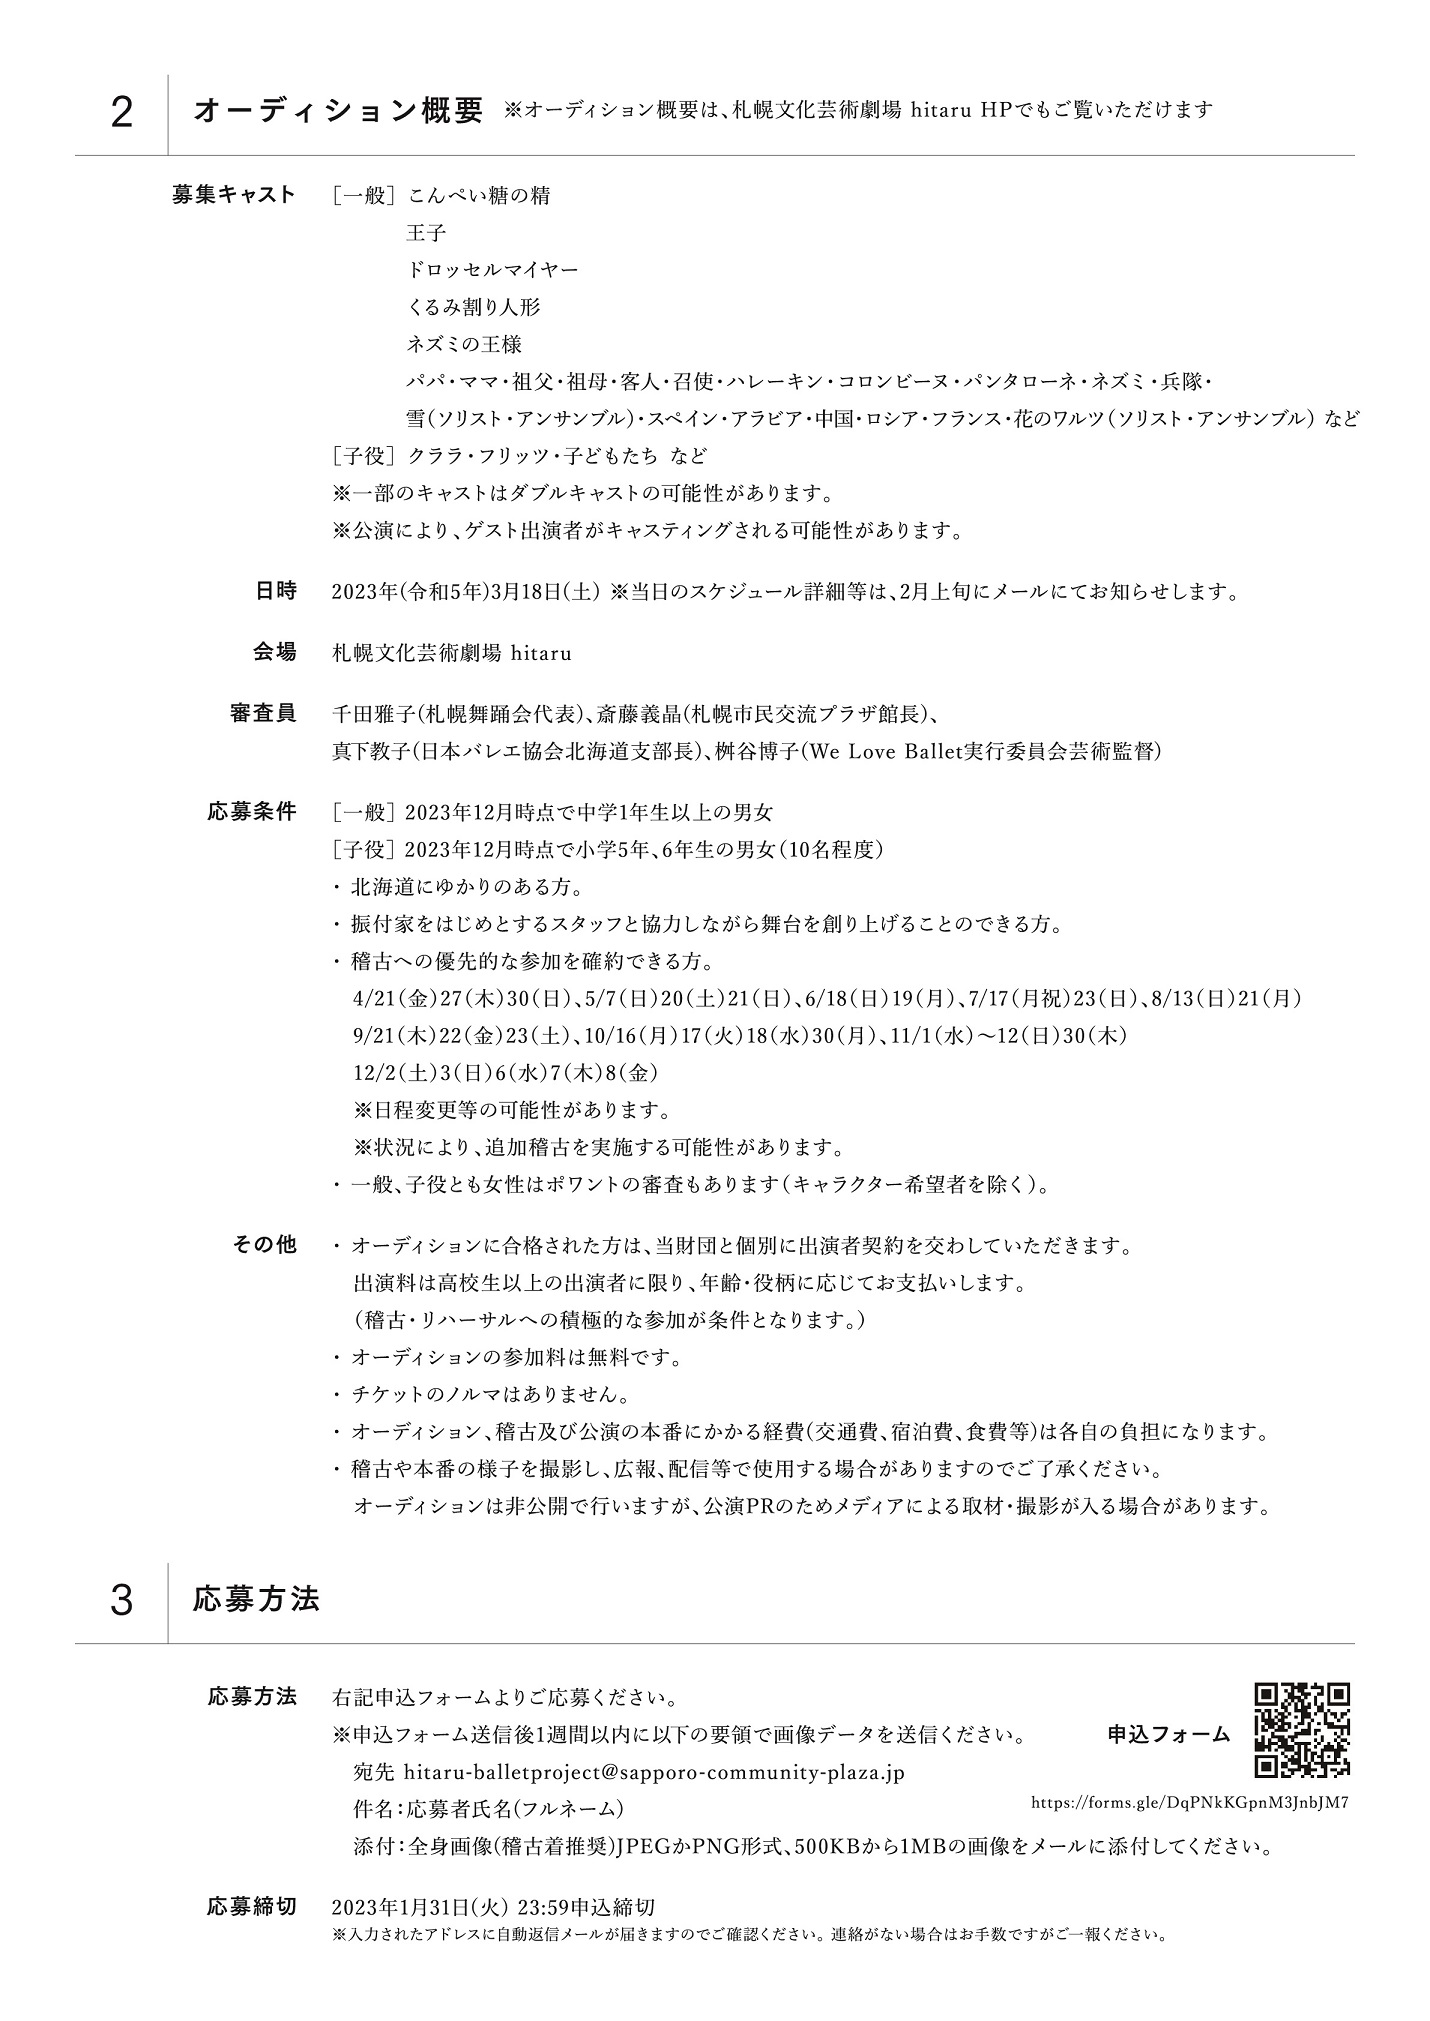 hitaruバレエプロジェクト「くるみ割り人形」(全幕) オーディションイメージ2枚目